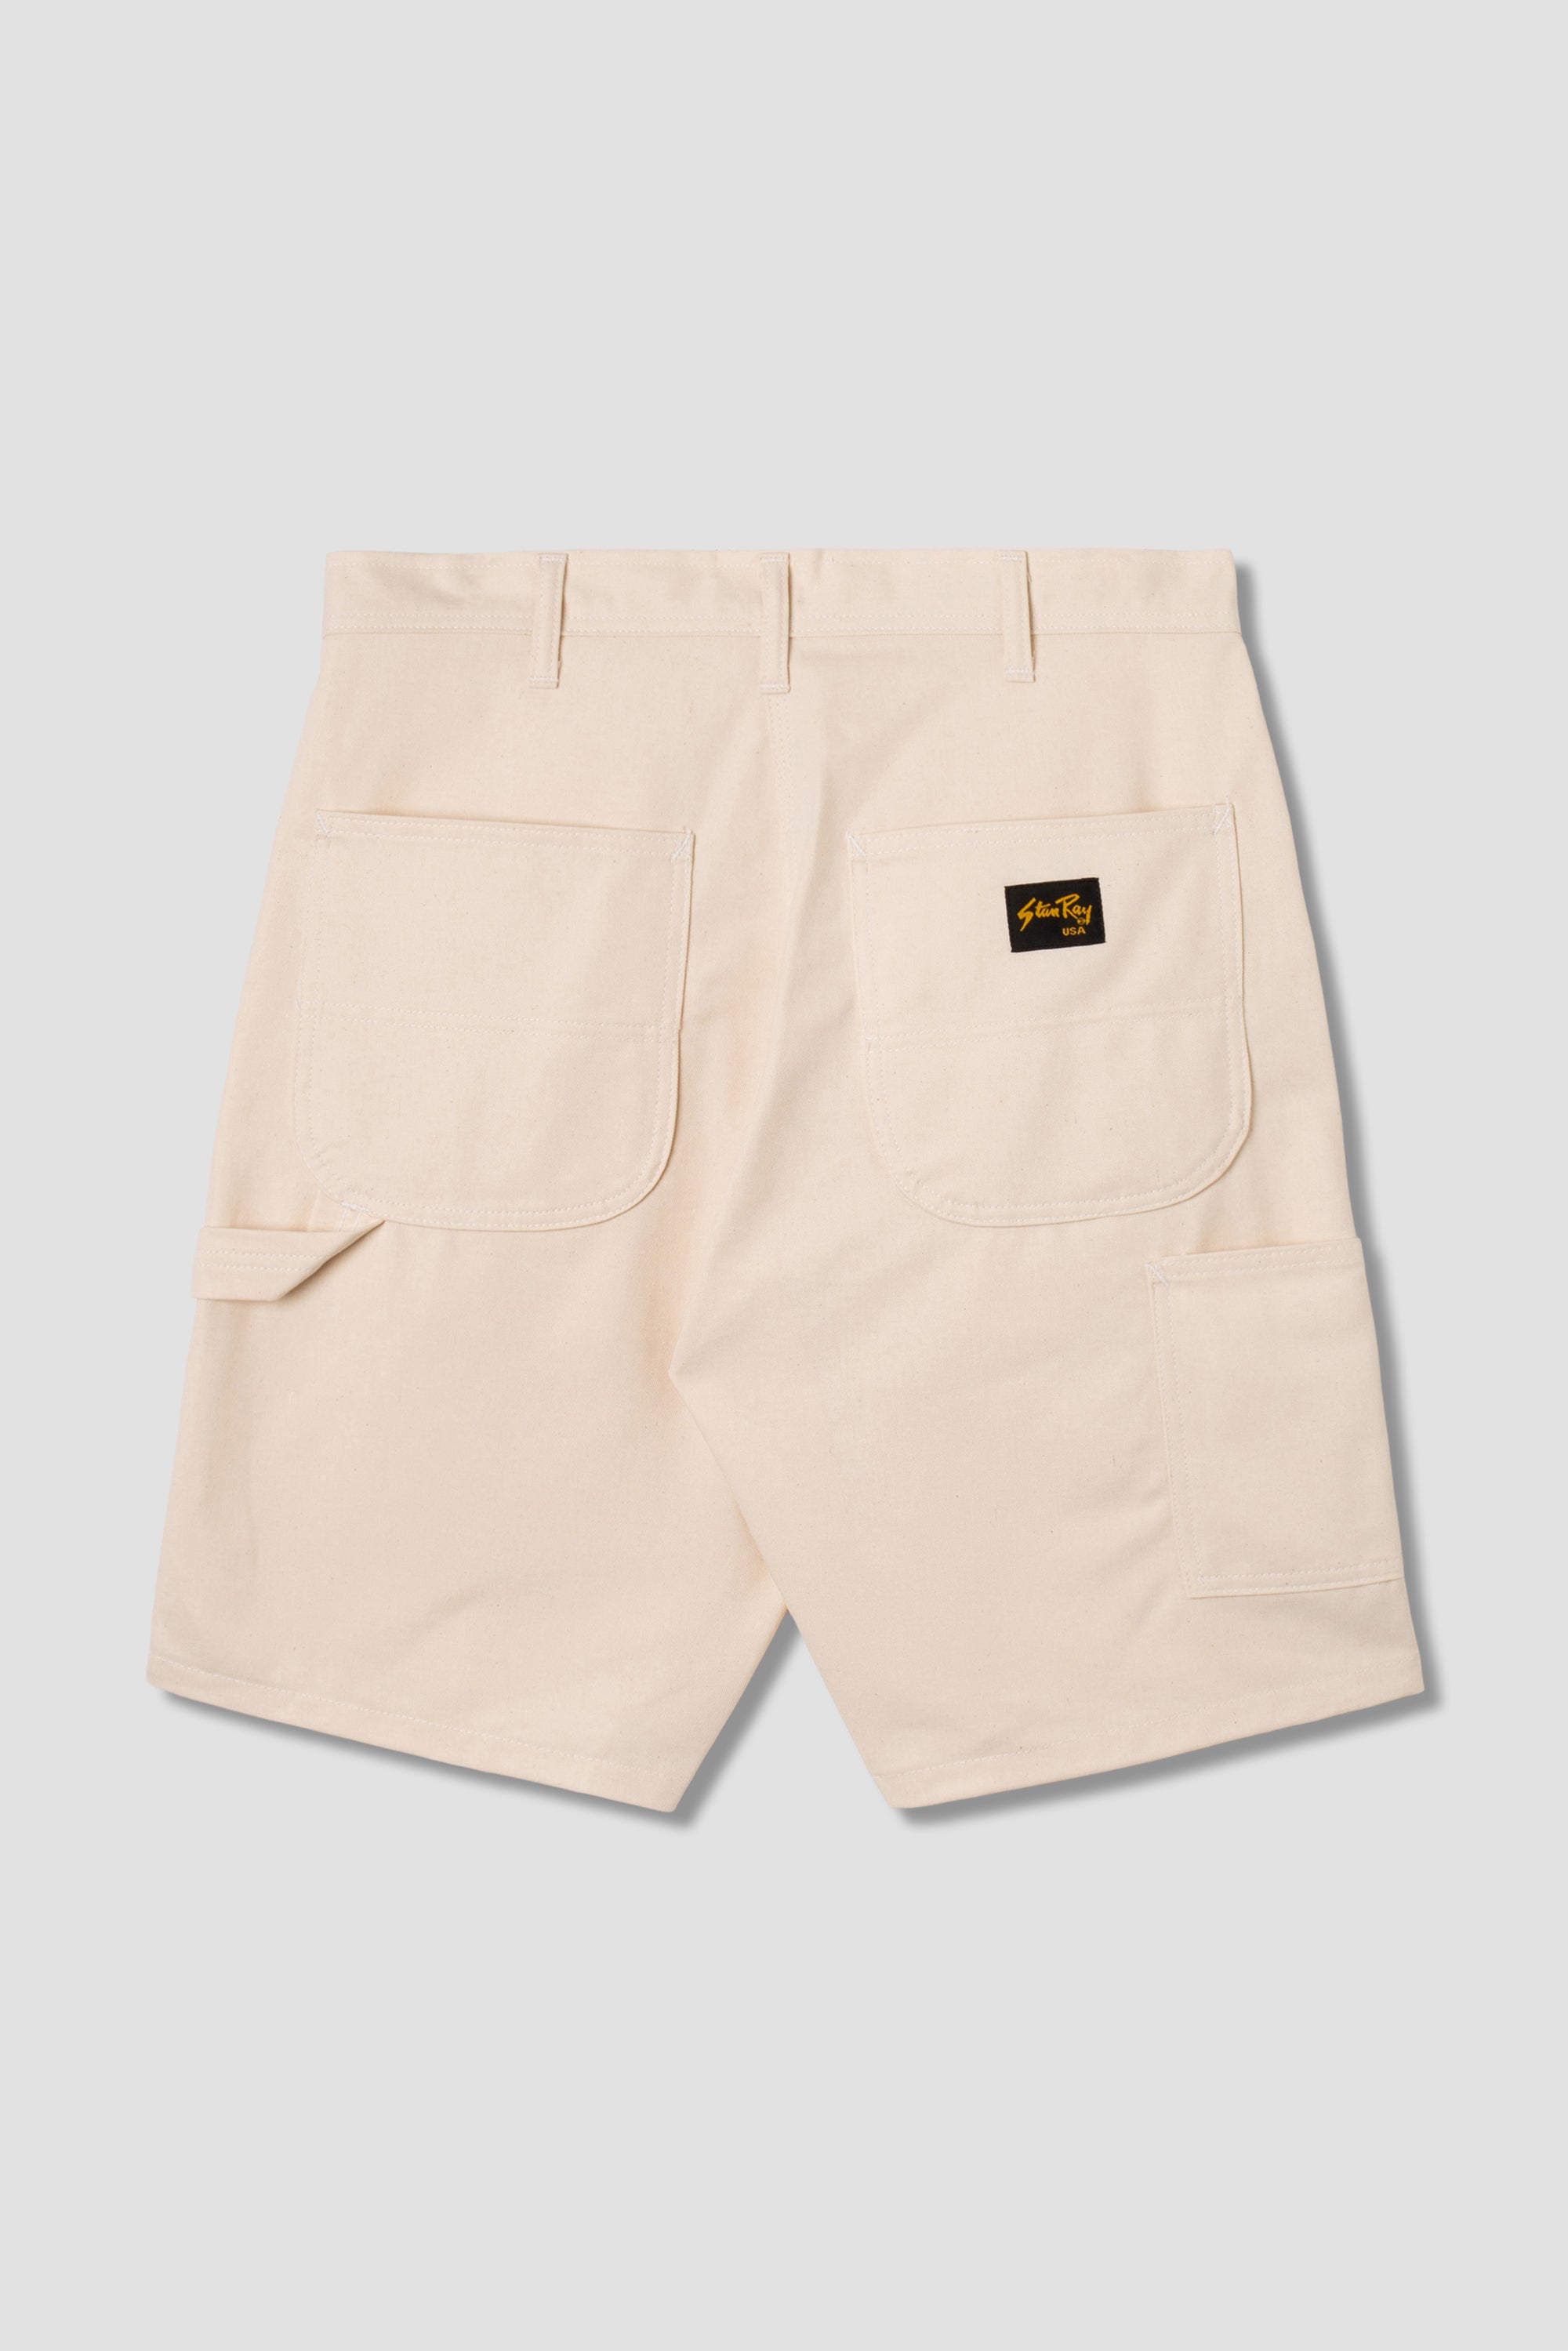 Shorts – Stan Ray